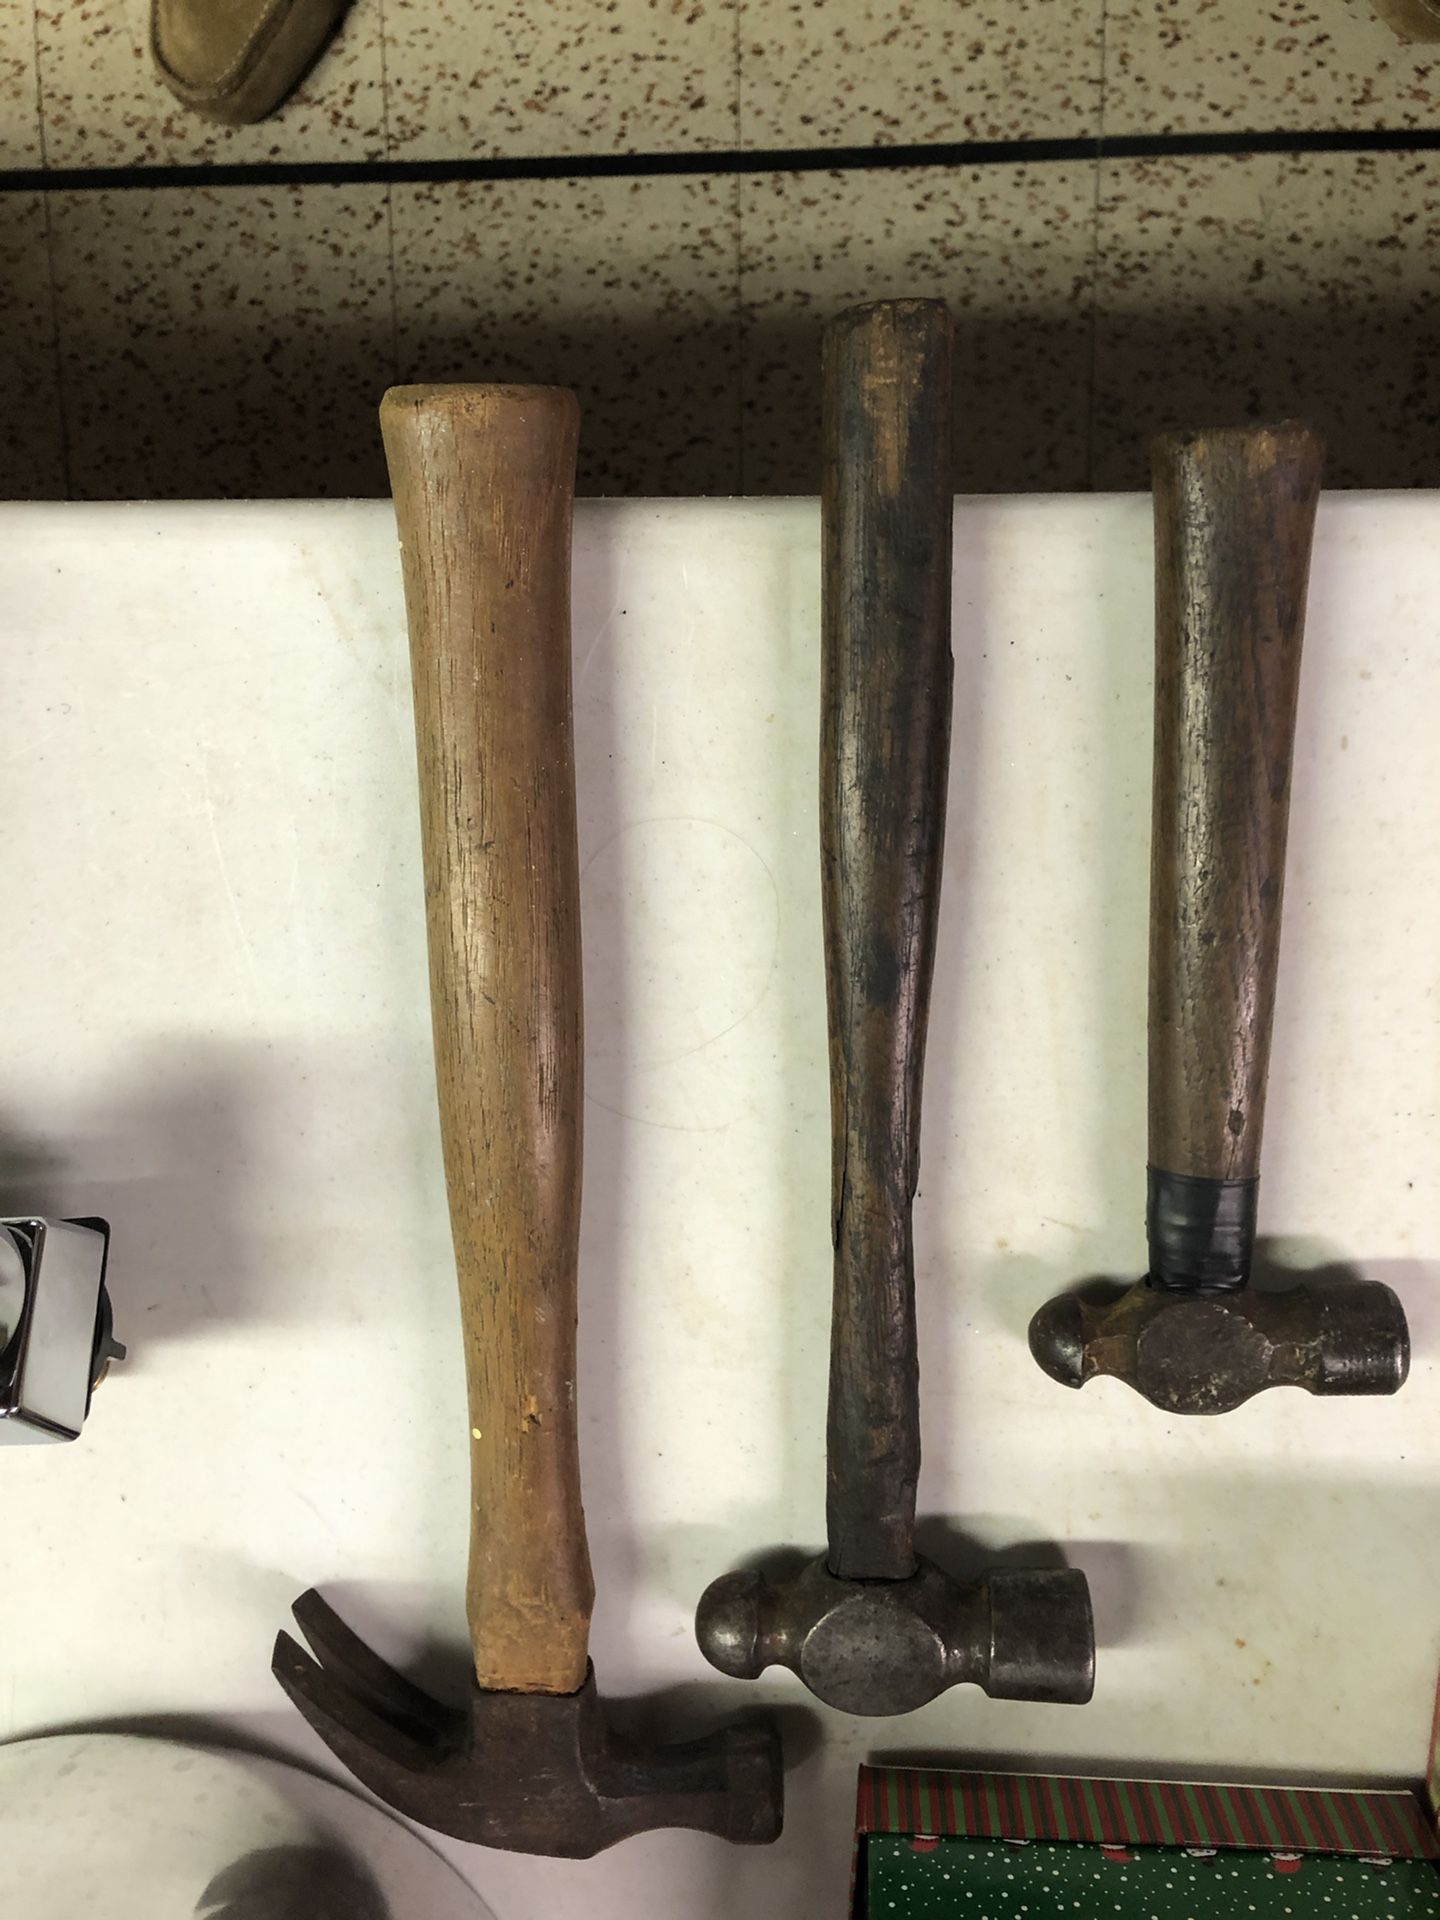 2 Ball Peen Hammers, 1 Regular Hammer and 1 Large Hammer